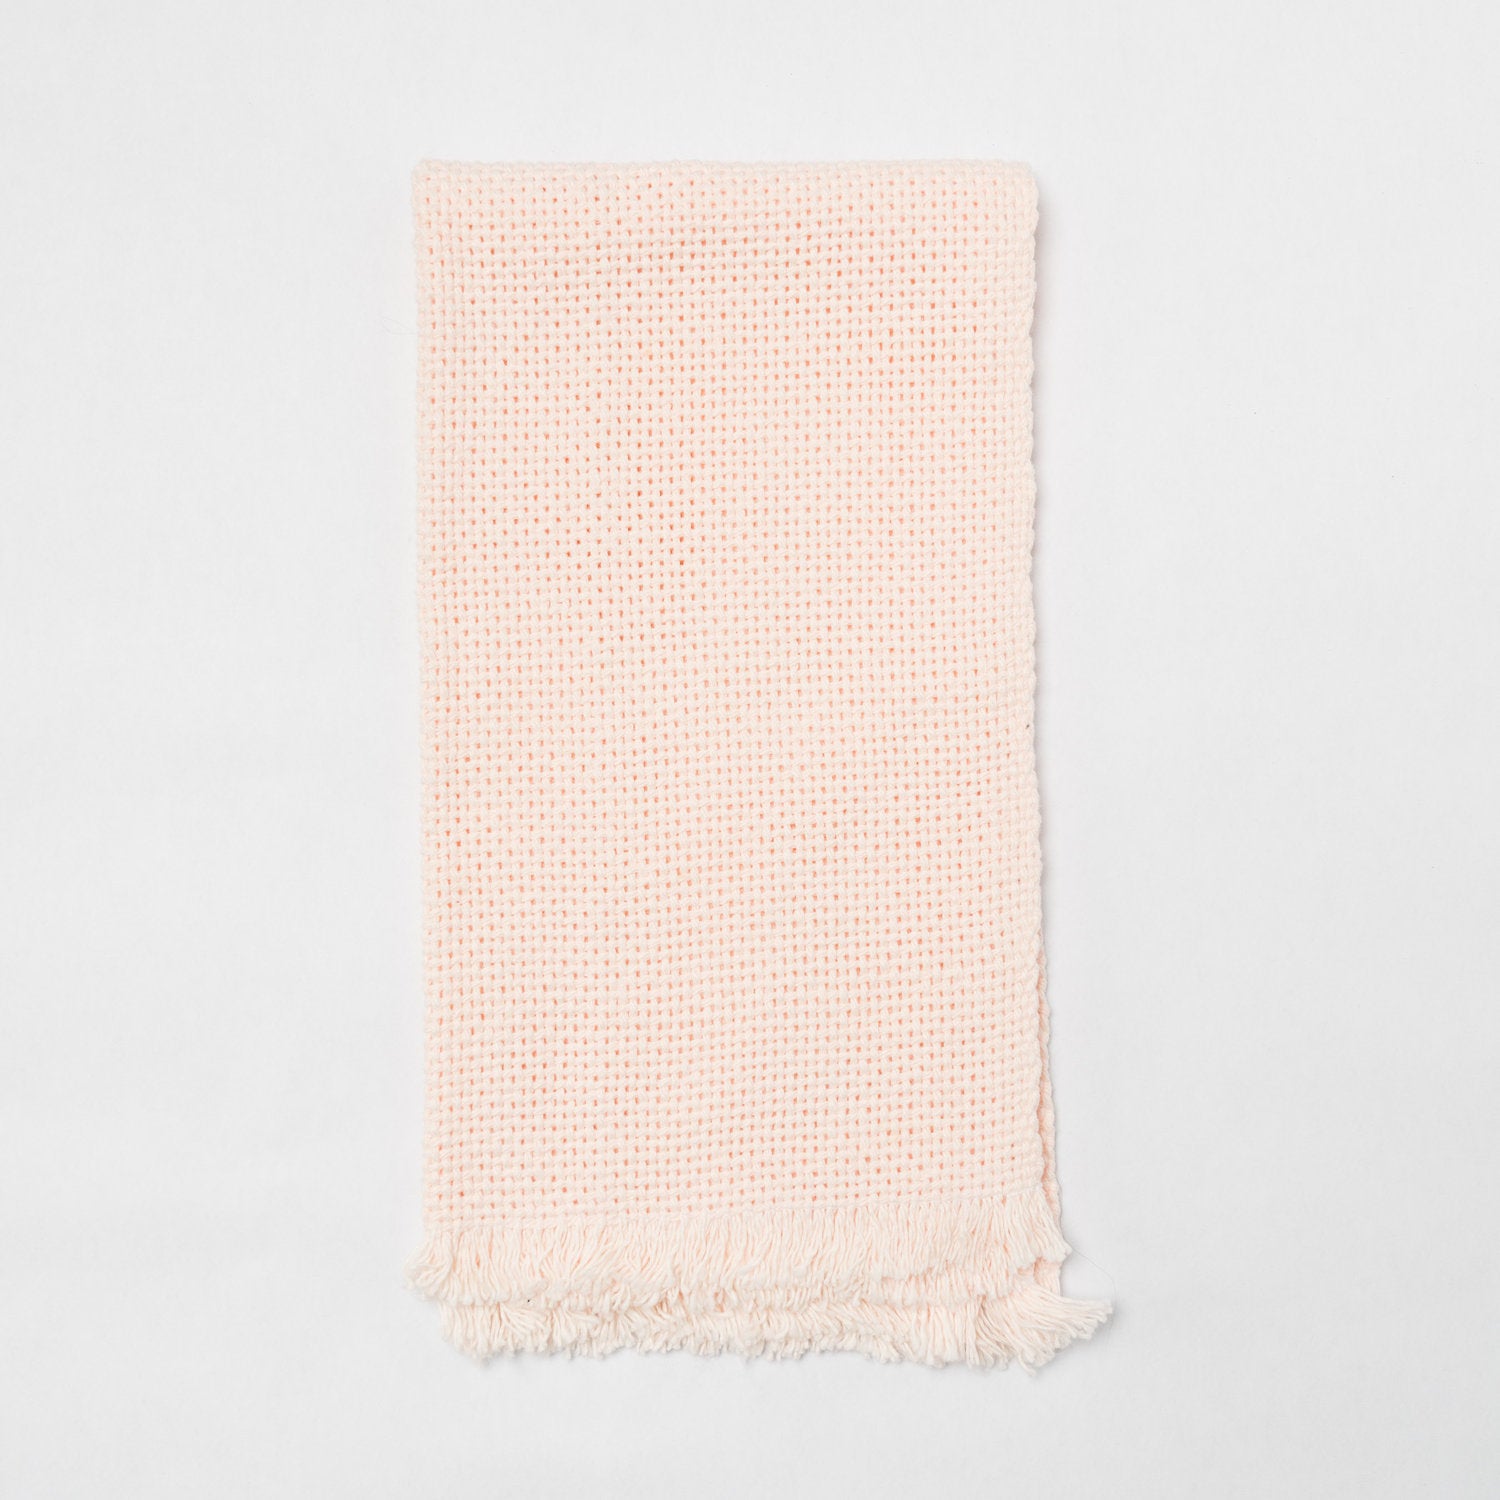 KD Weave Blush Hand Towel, Set of 2